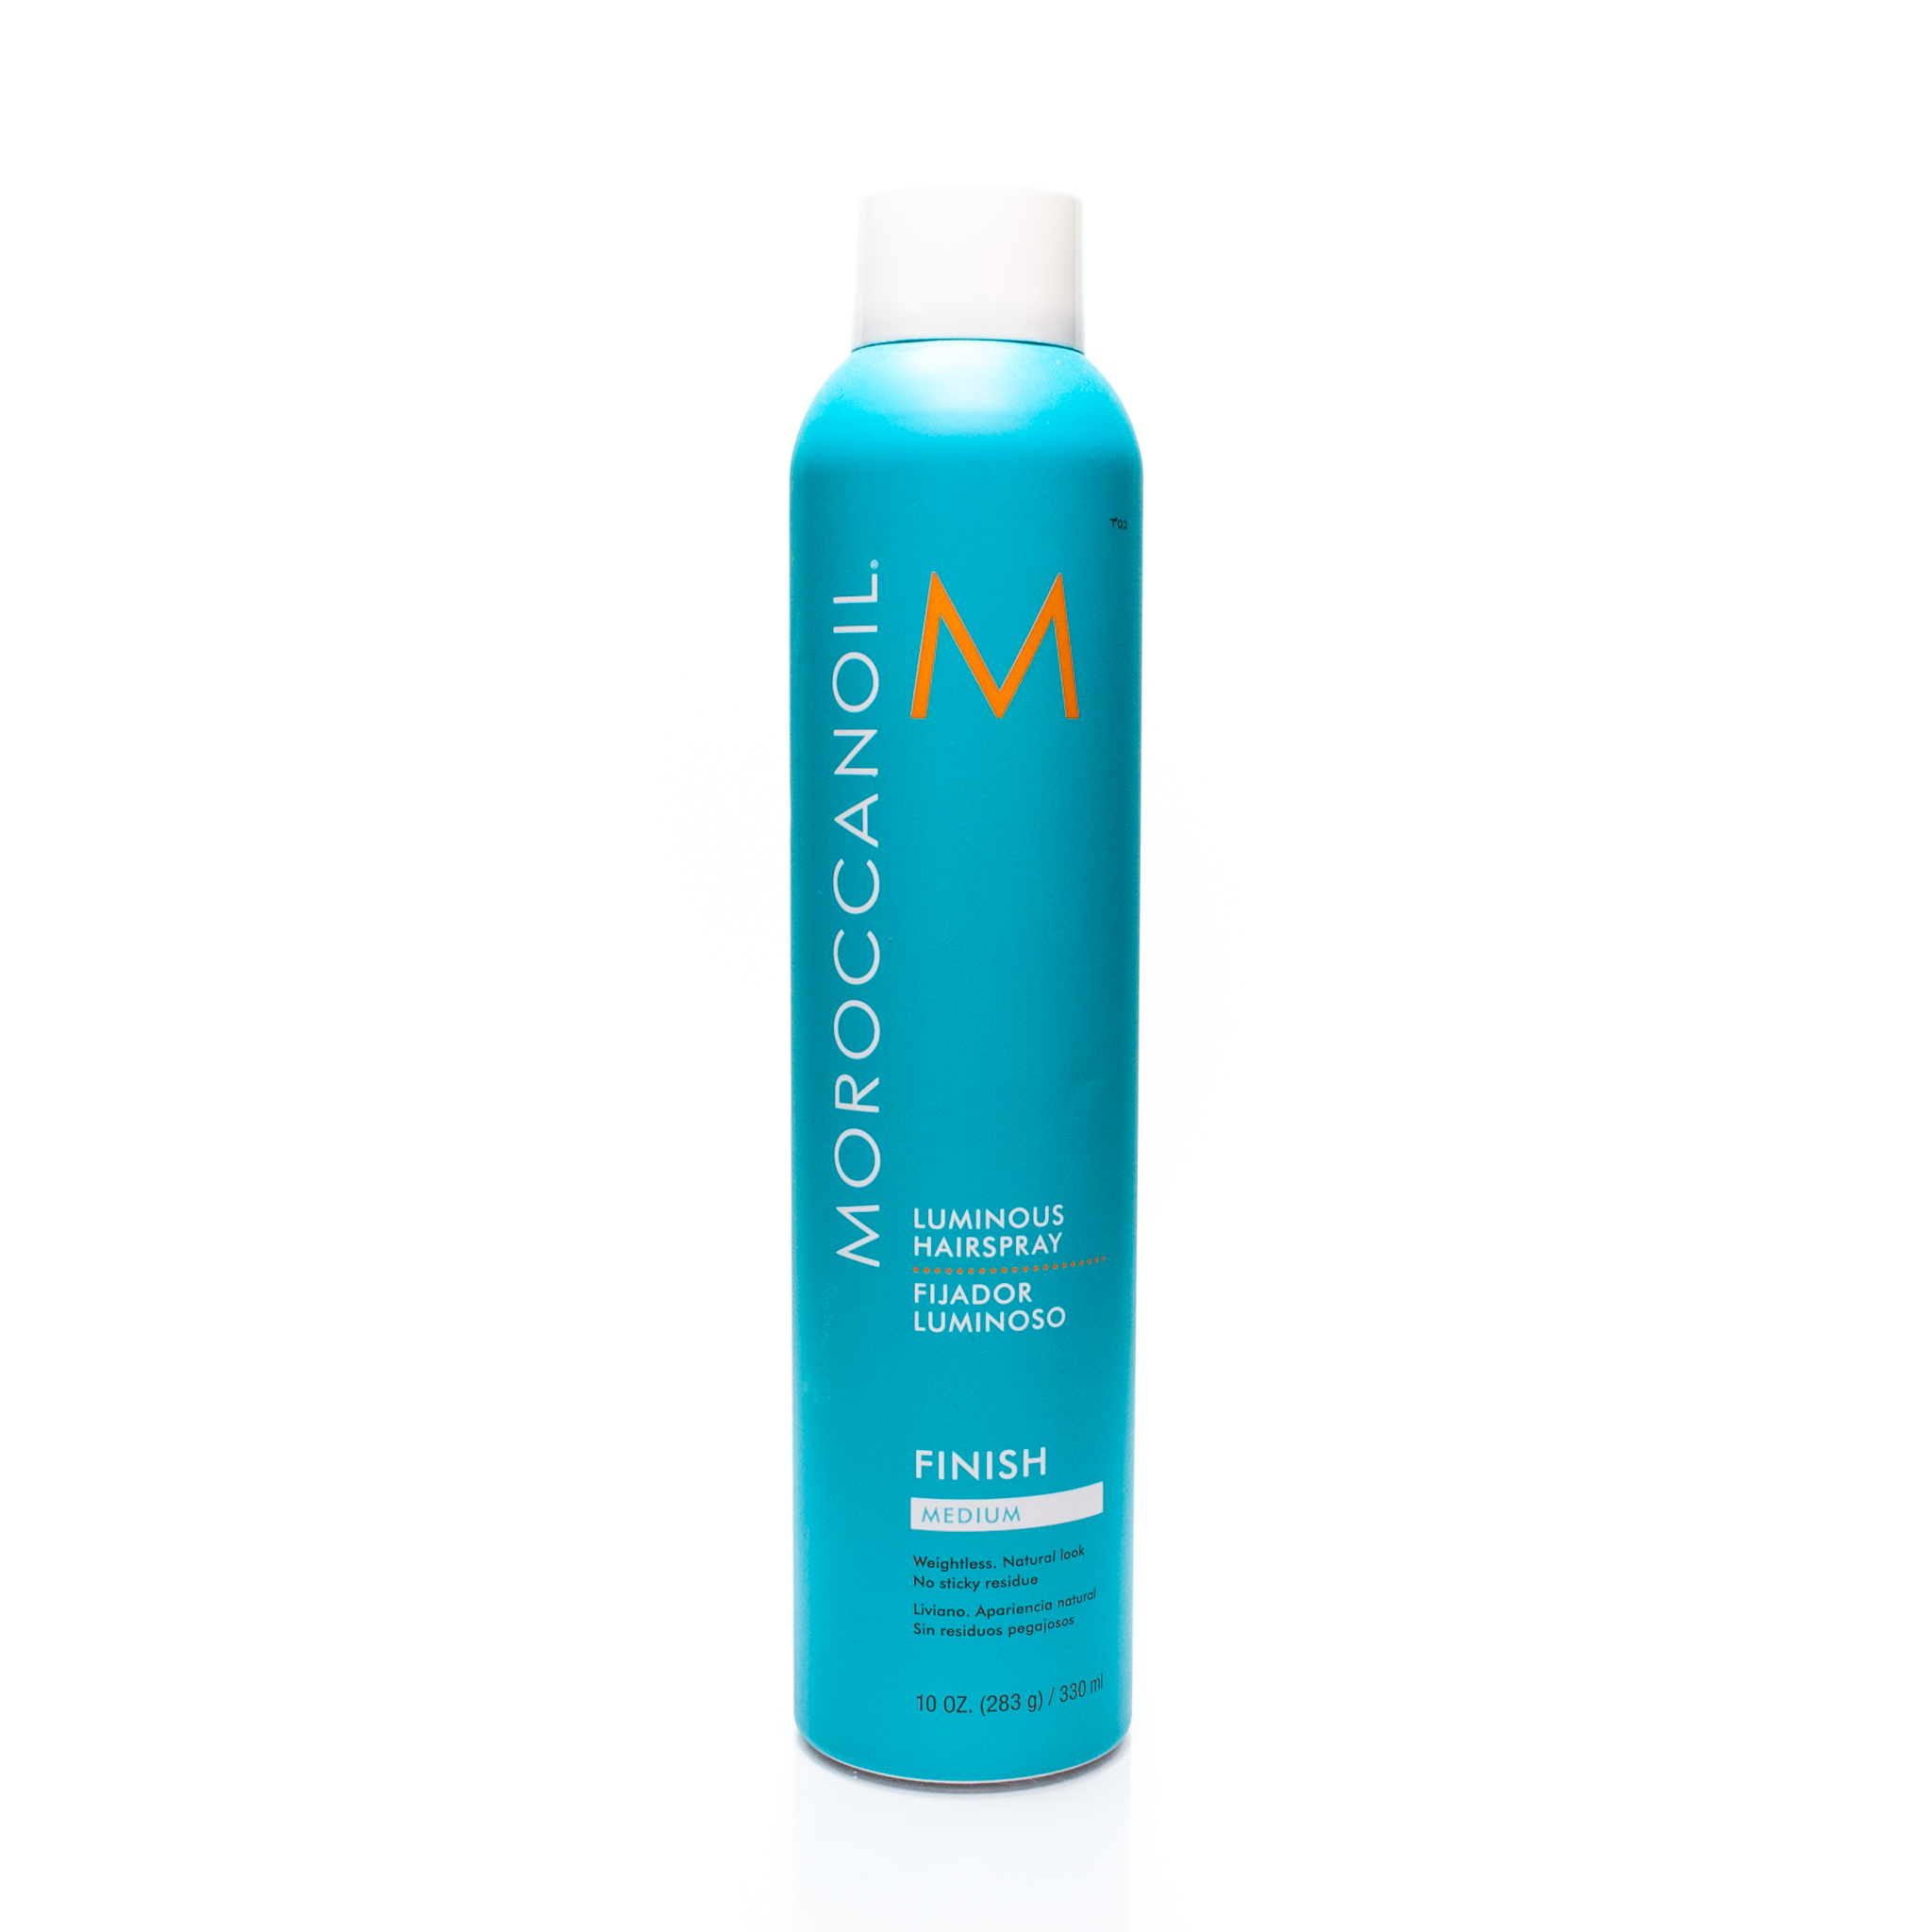 moroccanoil luminous hairspray walmart